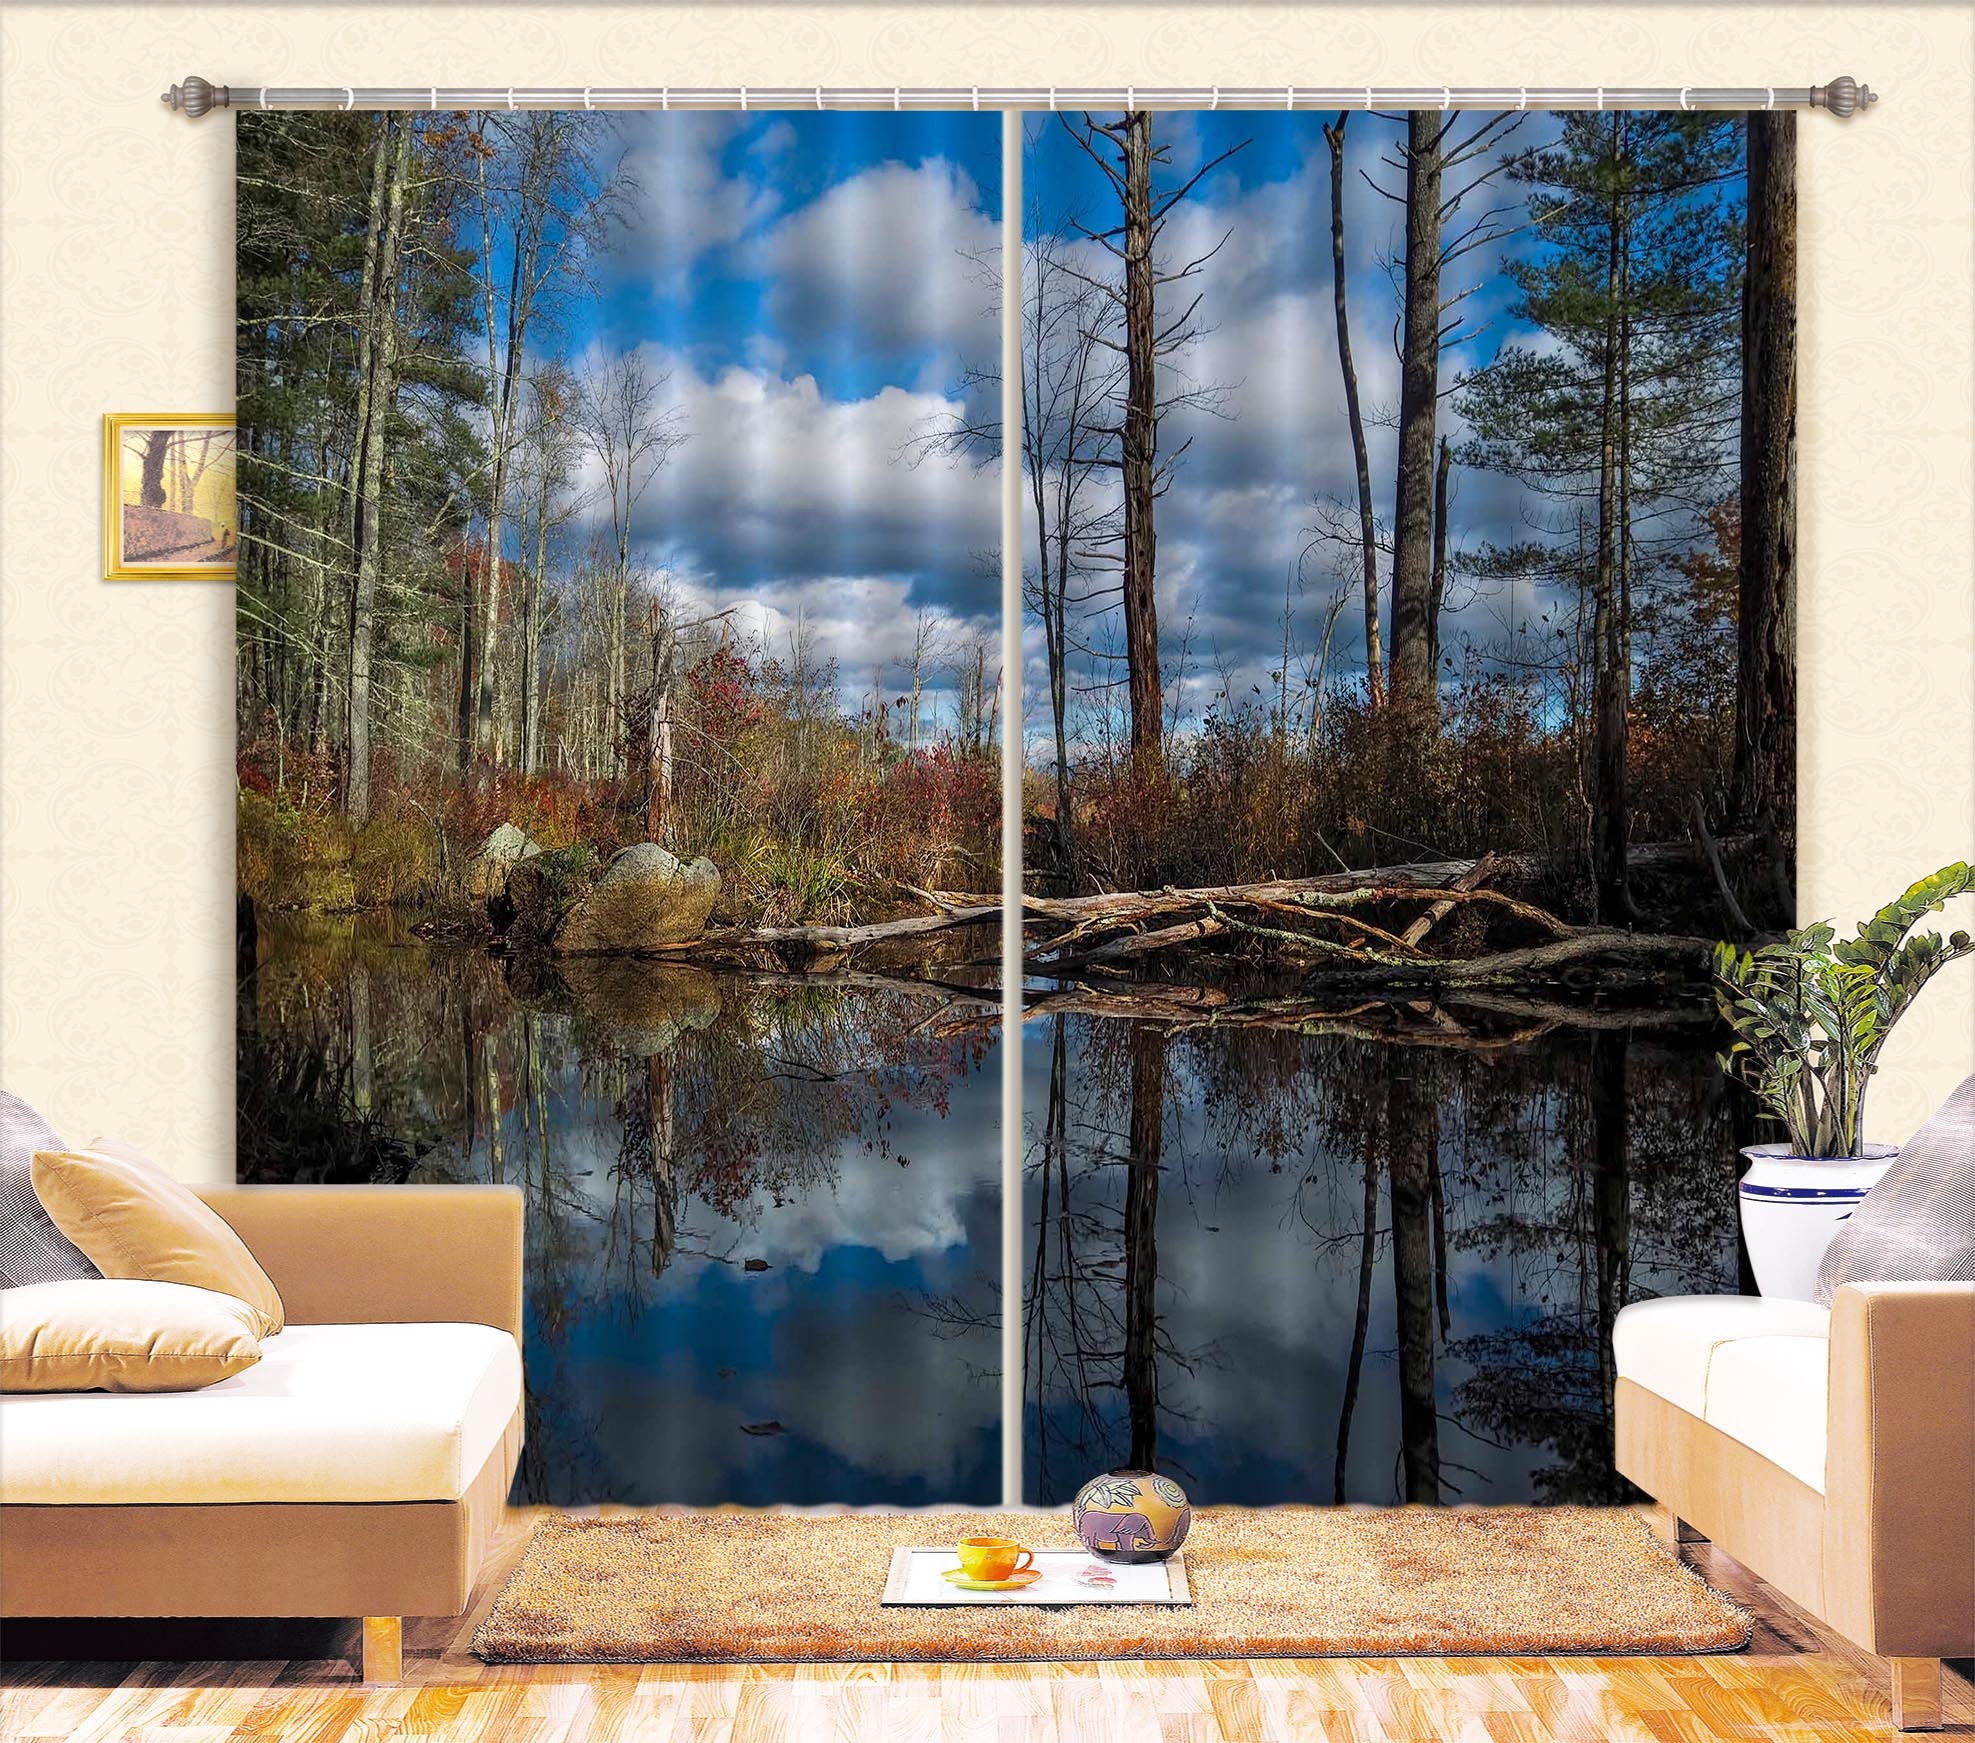 3D Cloud Pond 005 Jerry LoFaro Curtain Curtains Drapes